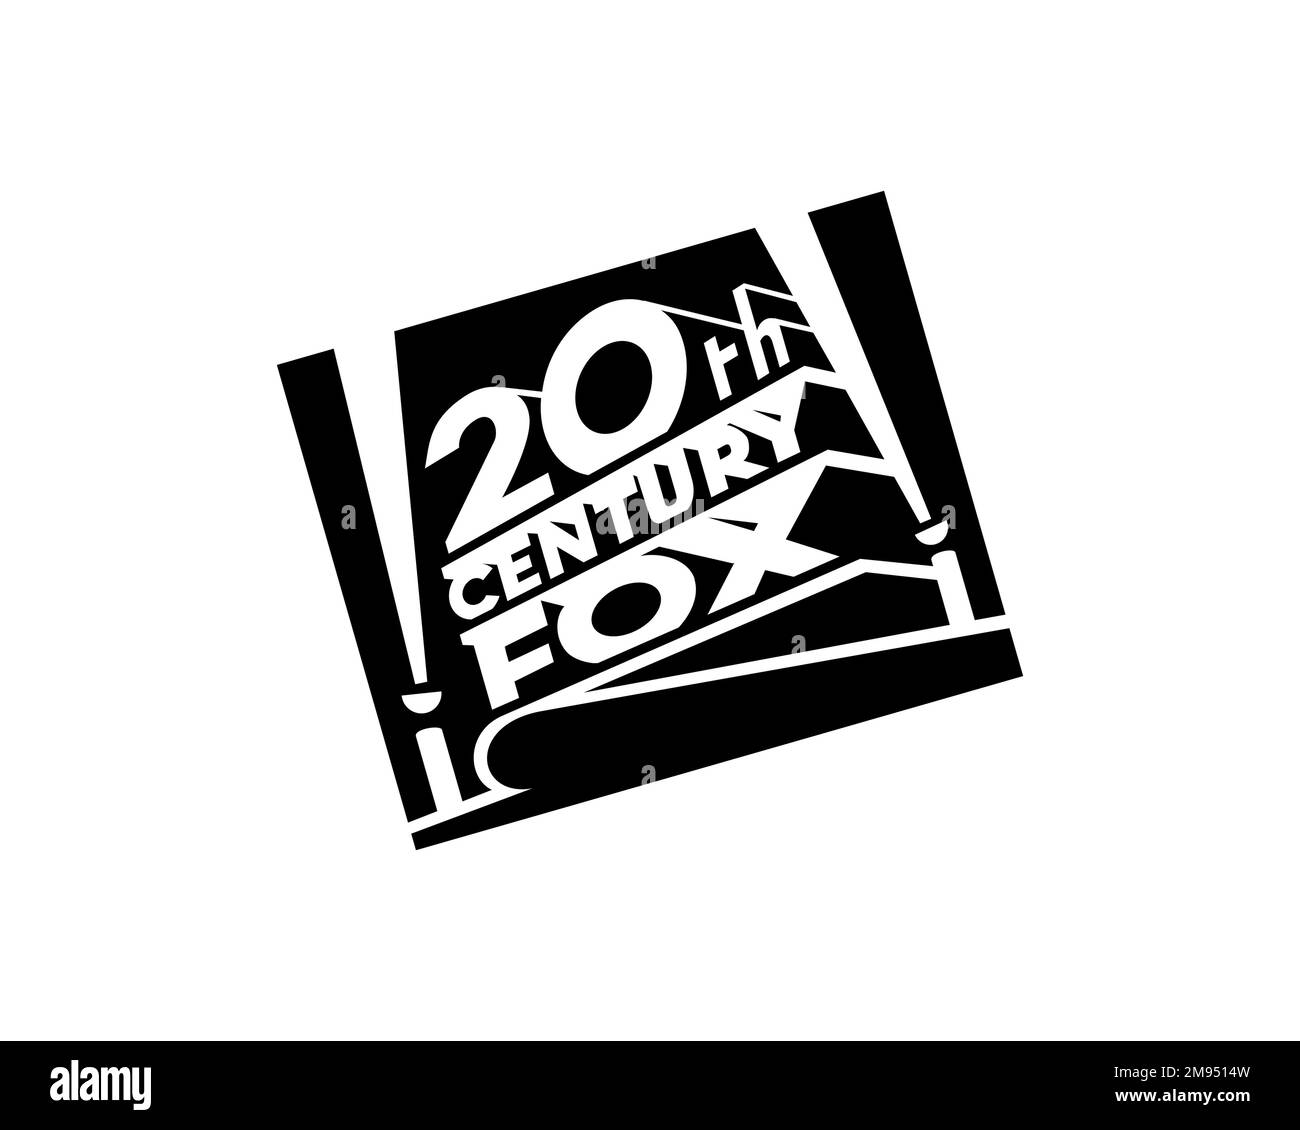 20th Century Fox, rotated logo, white background Stock Photo